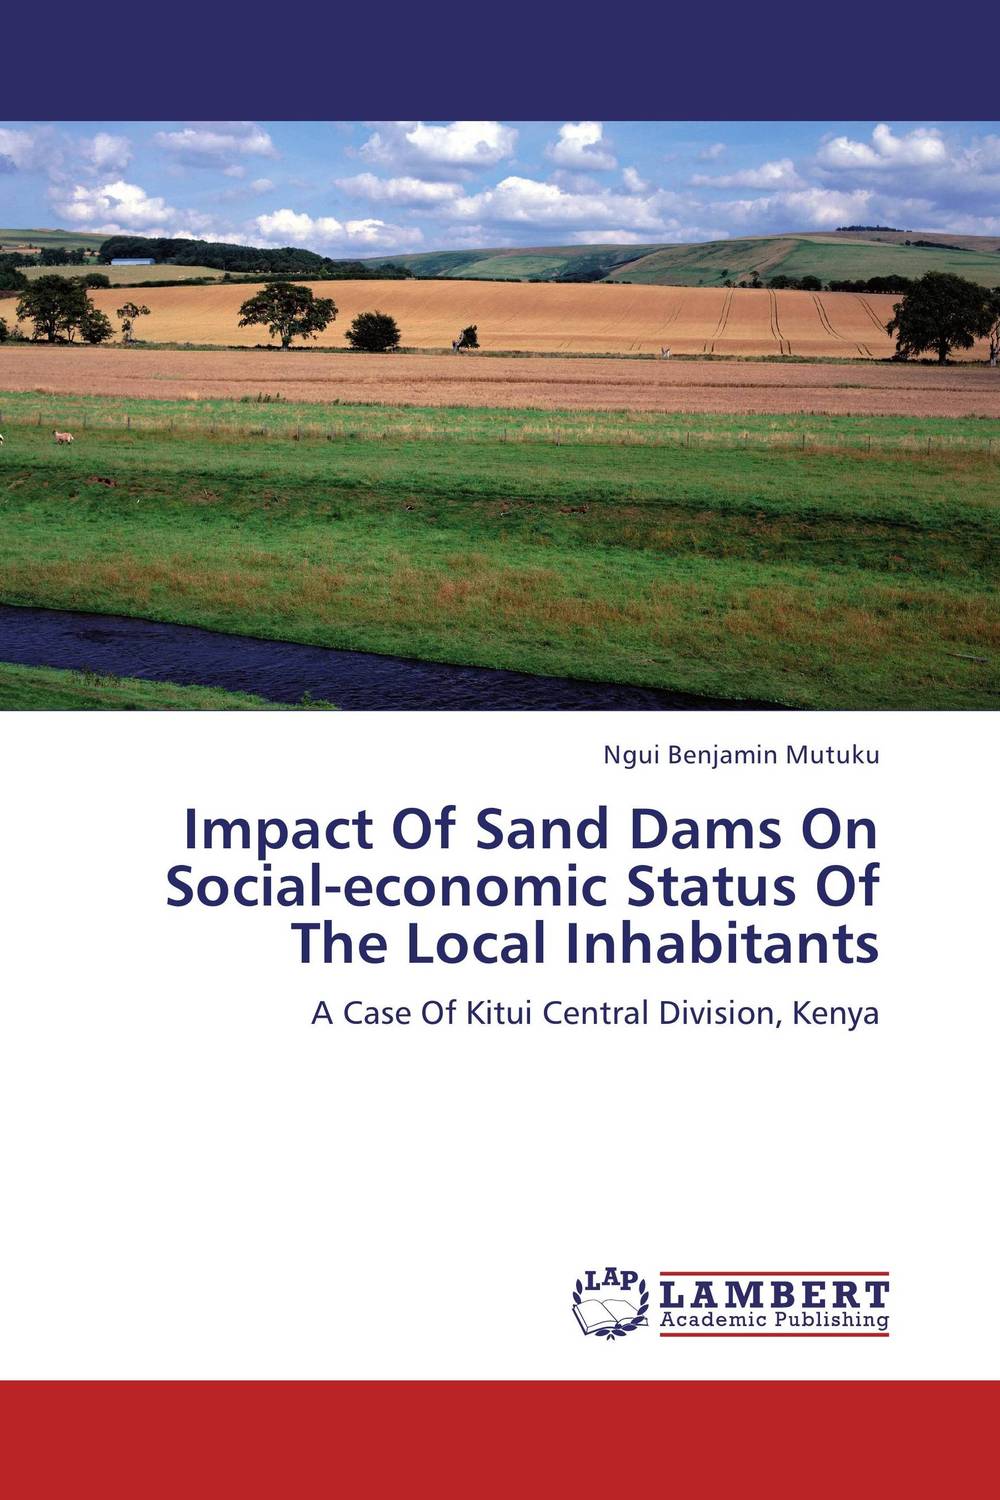 Impact Of Sand Dams On Social-economic Status Of The Local Inhabitants